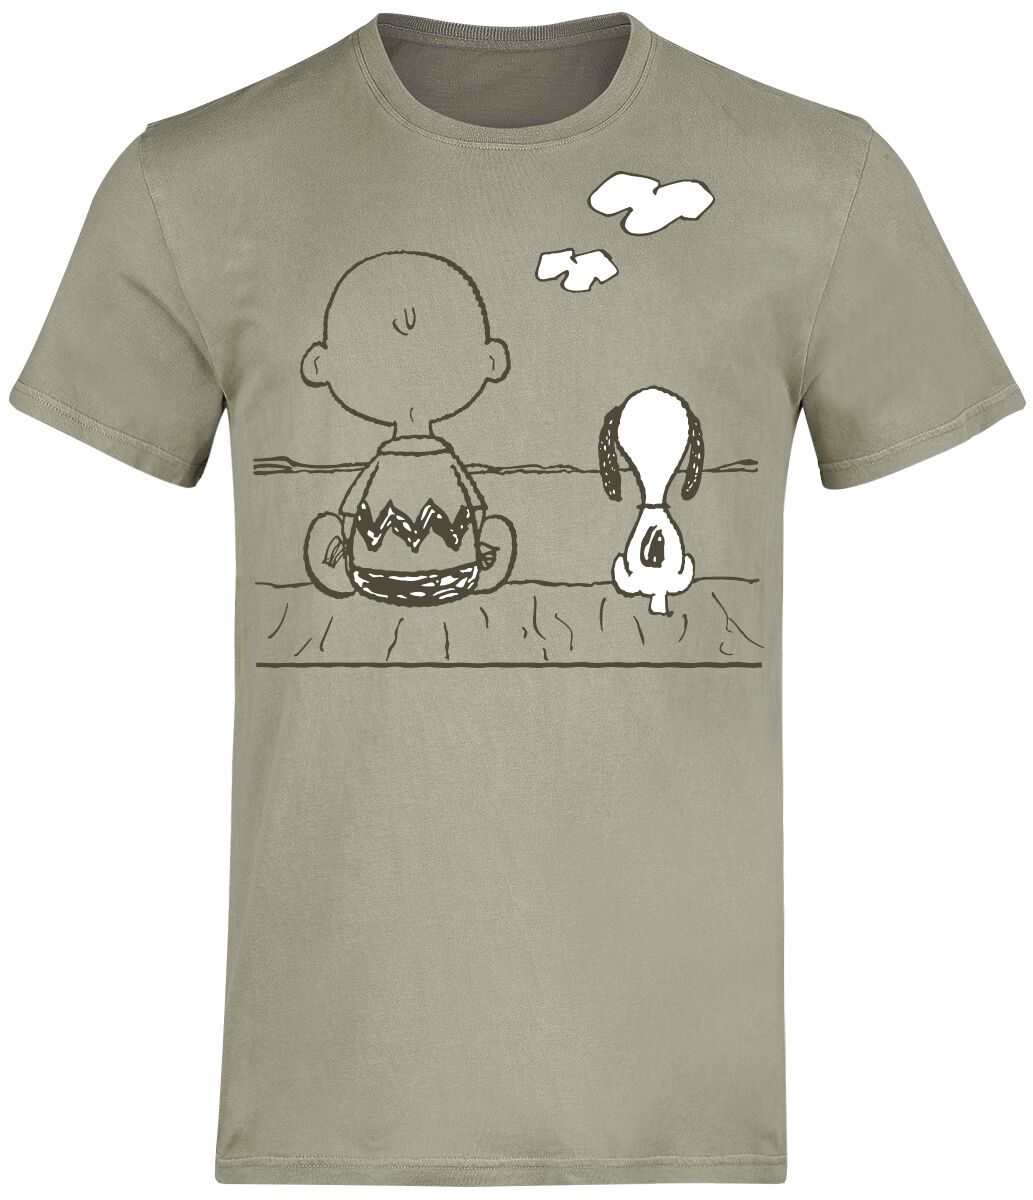 Peanuts Charlie Brown und Snoopy T-Shirt grün in S